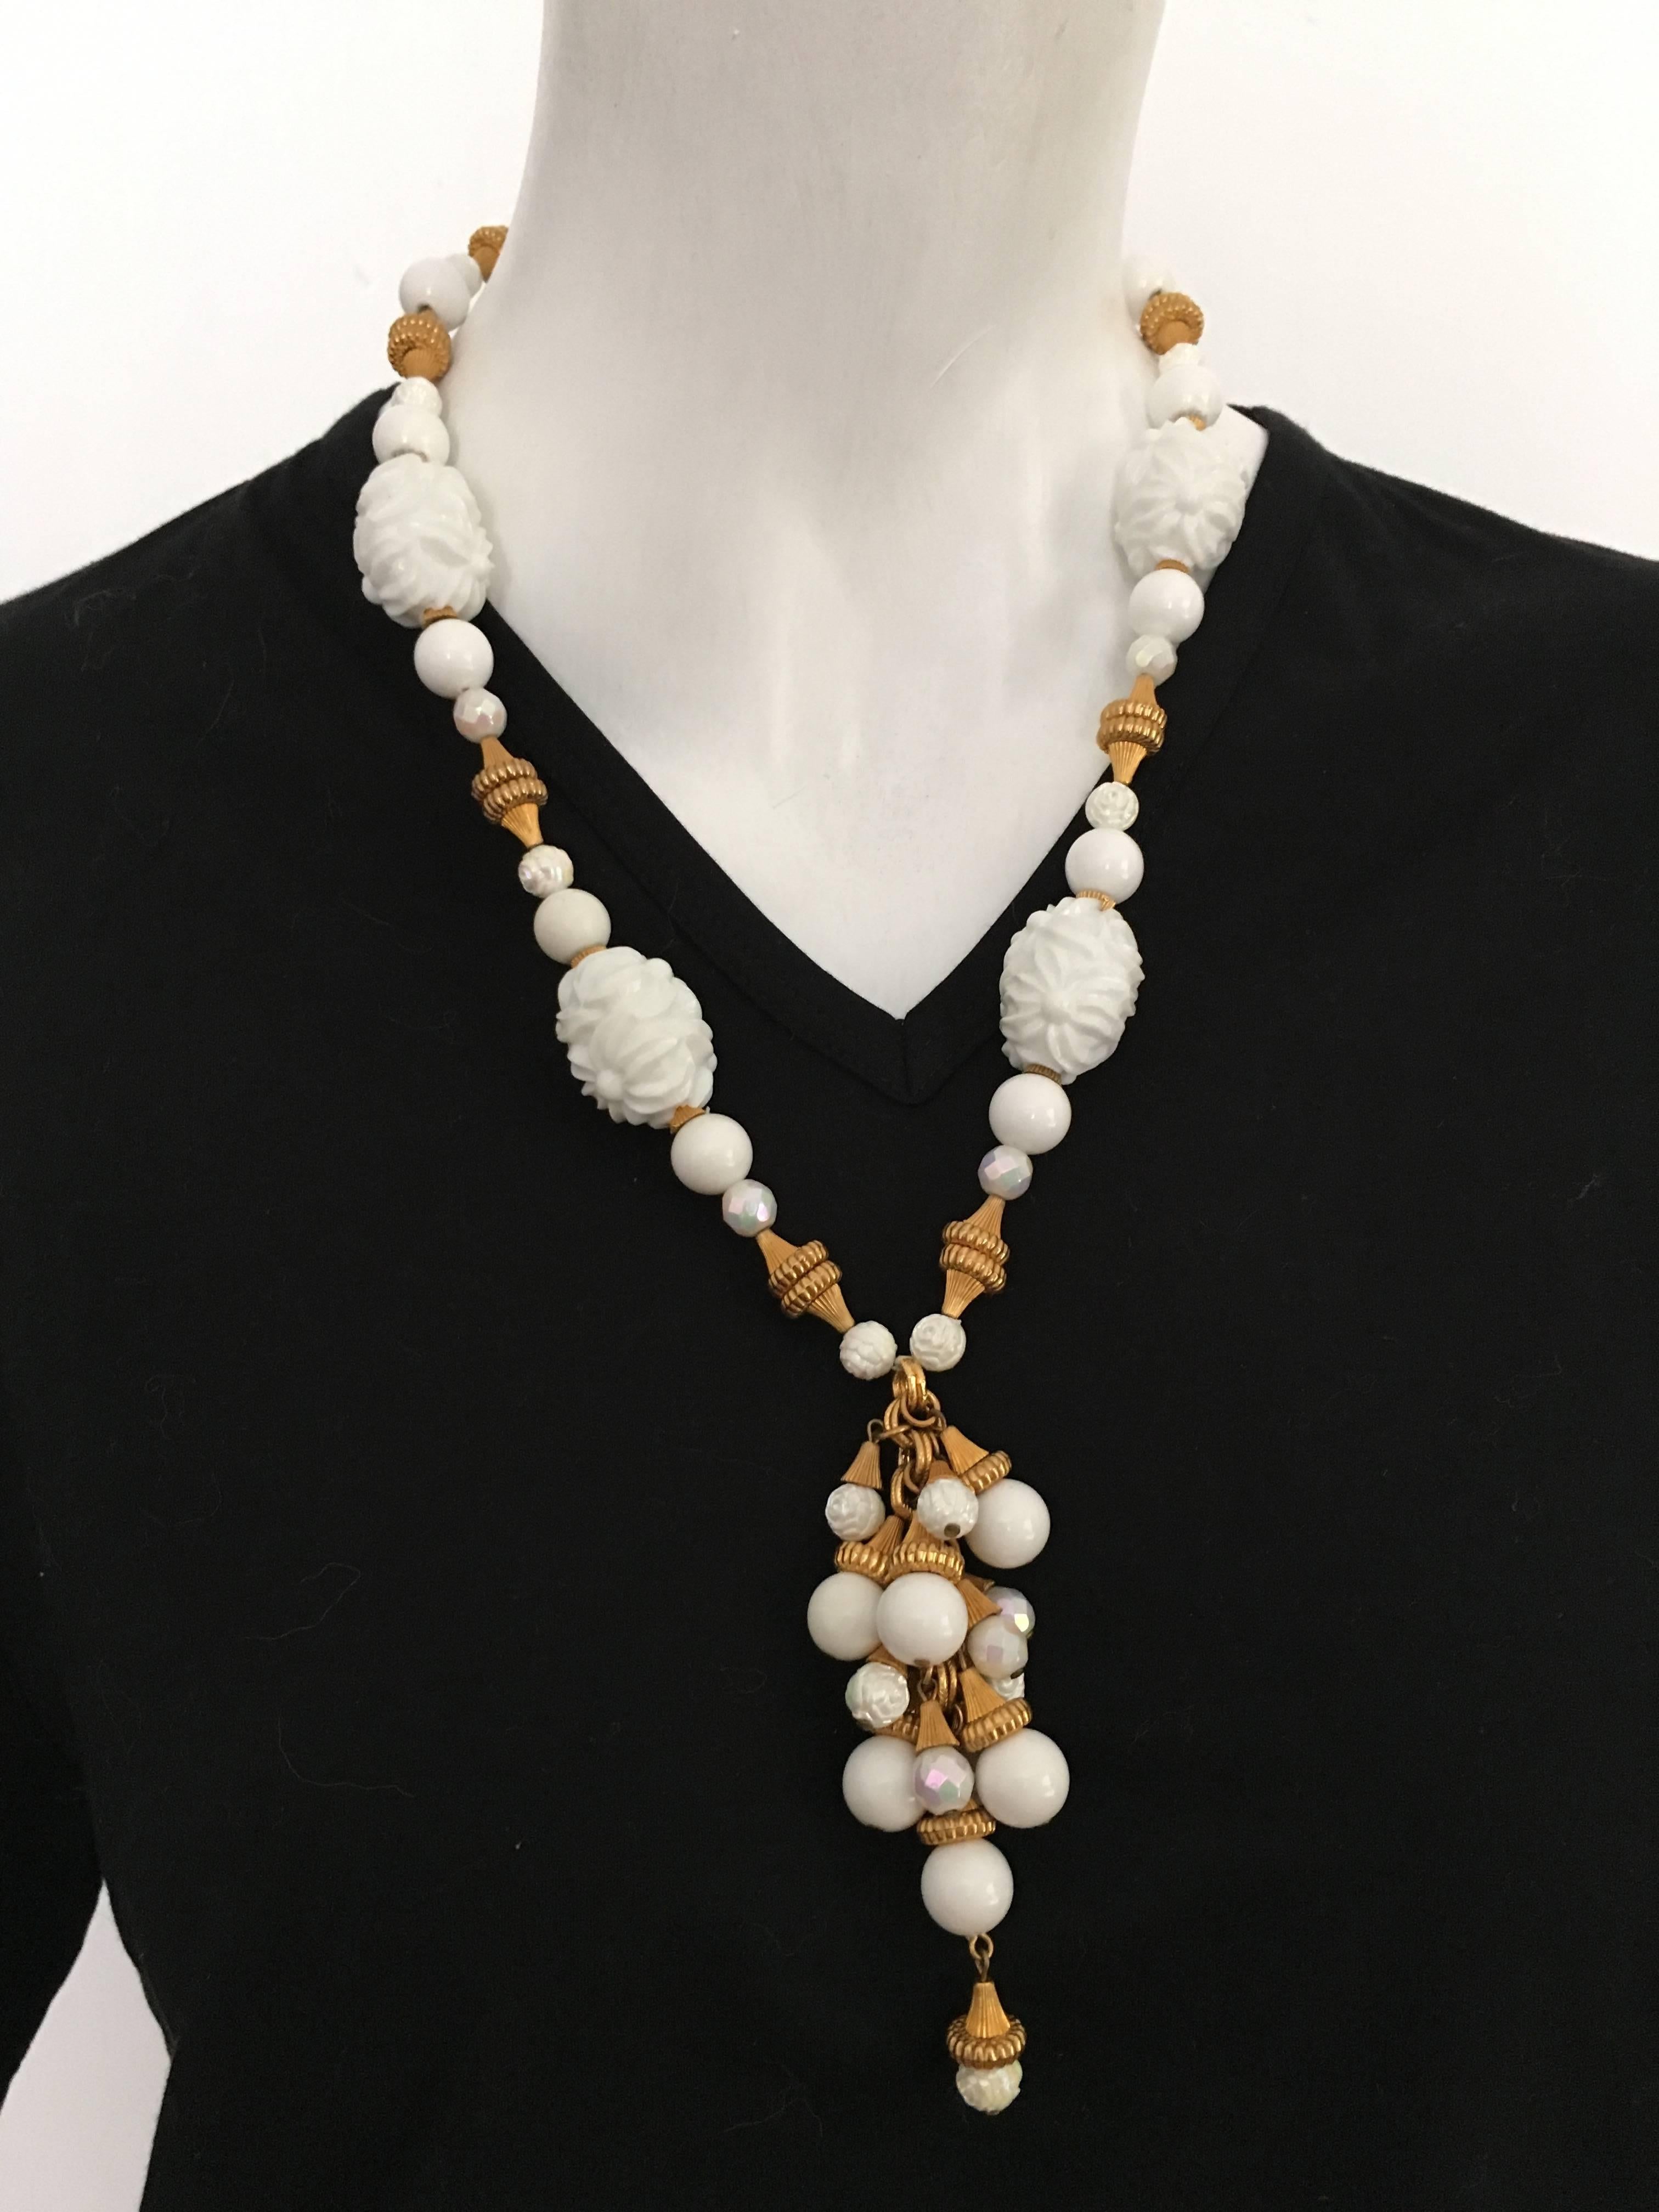 Hattie Carnegie Necklace With Tassel Pendant, 1950s  In New Condition For Sale In Atlanta, GA